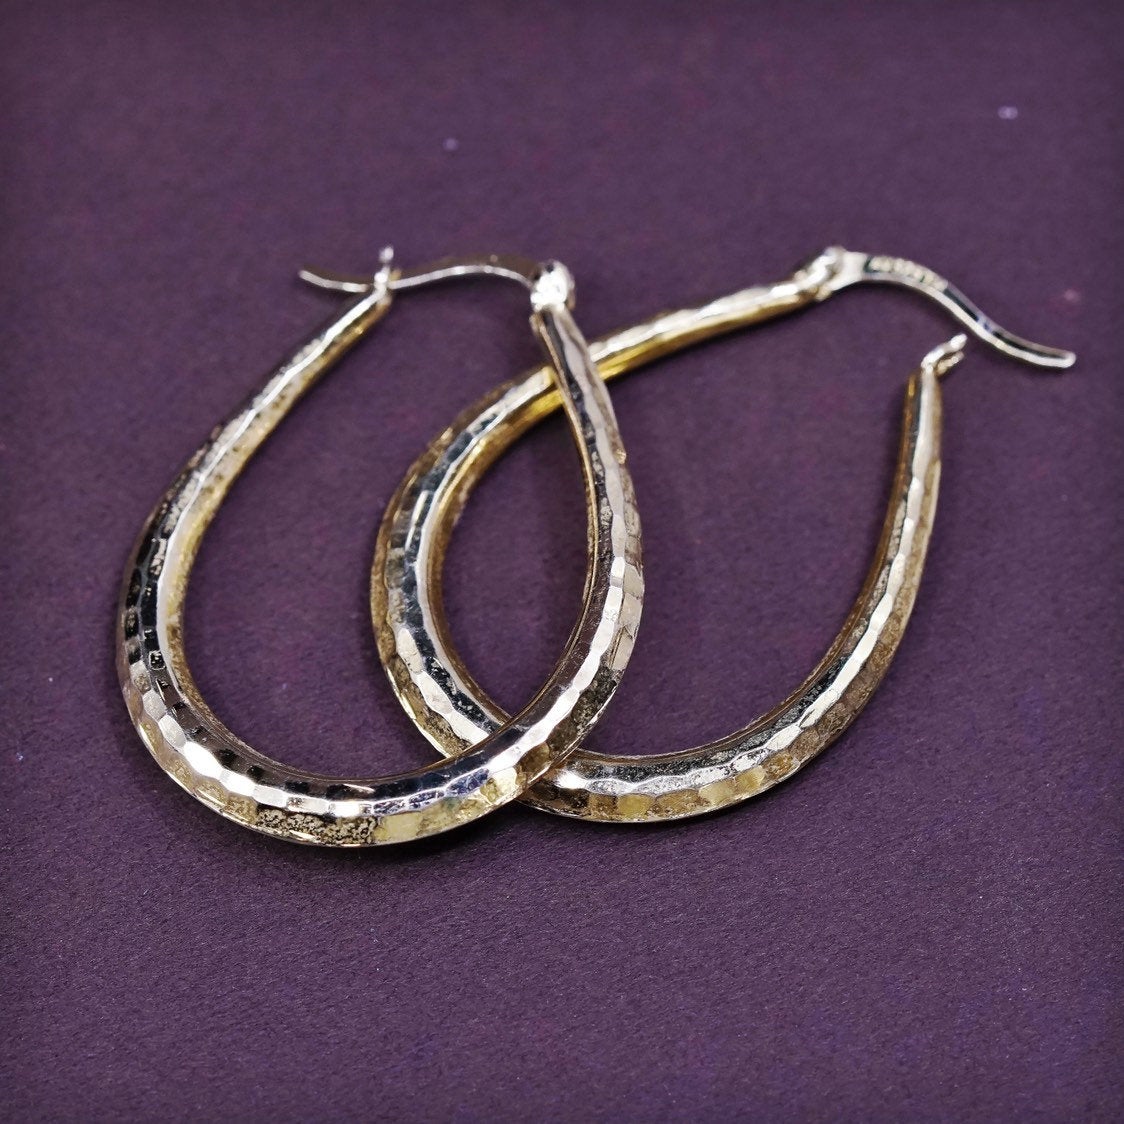 1.5", vtg vermeil gold over Sterling silver hoops, 925 textured earrings